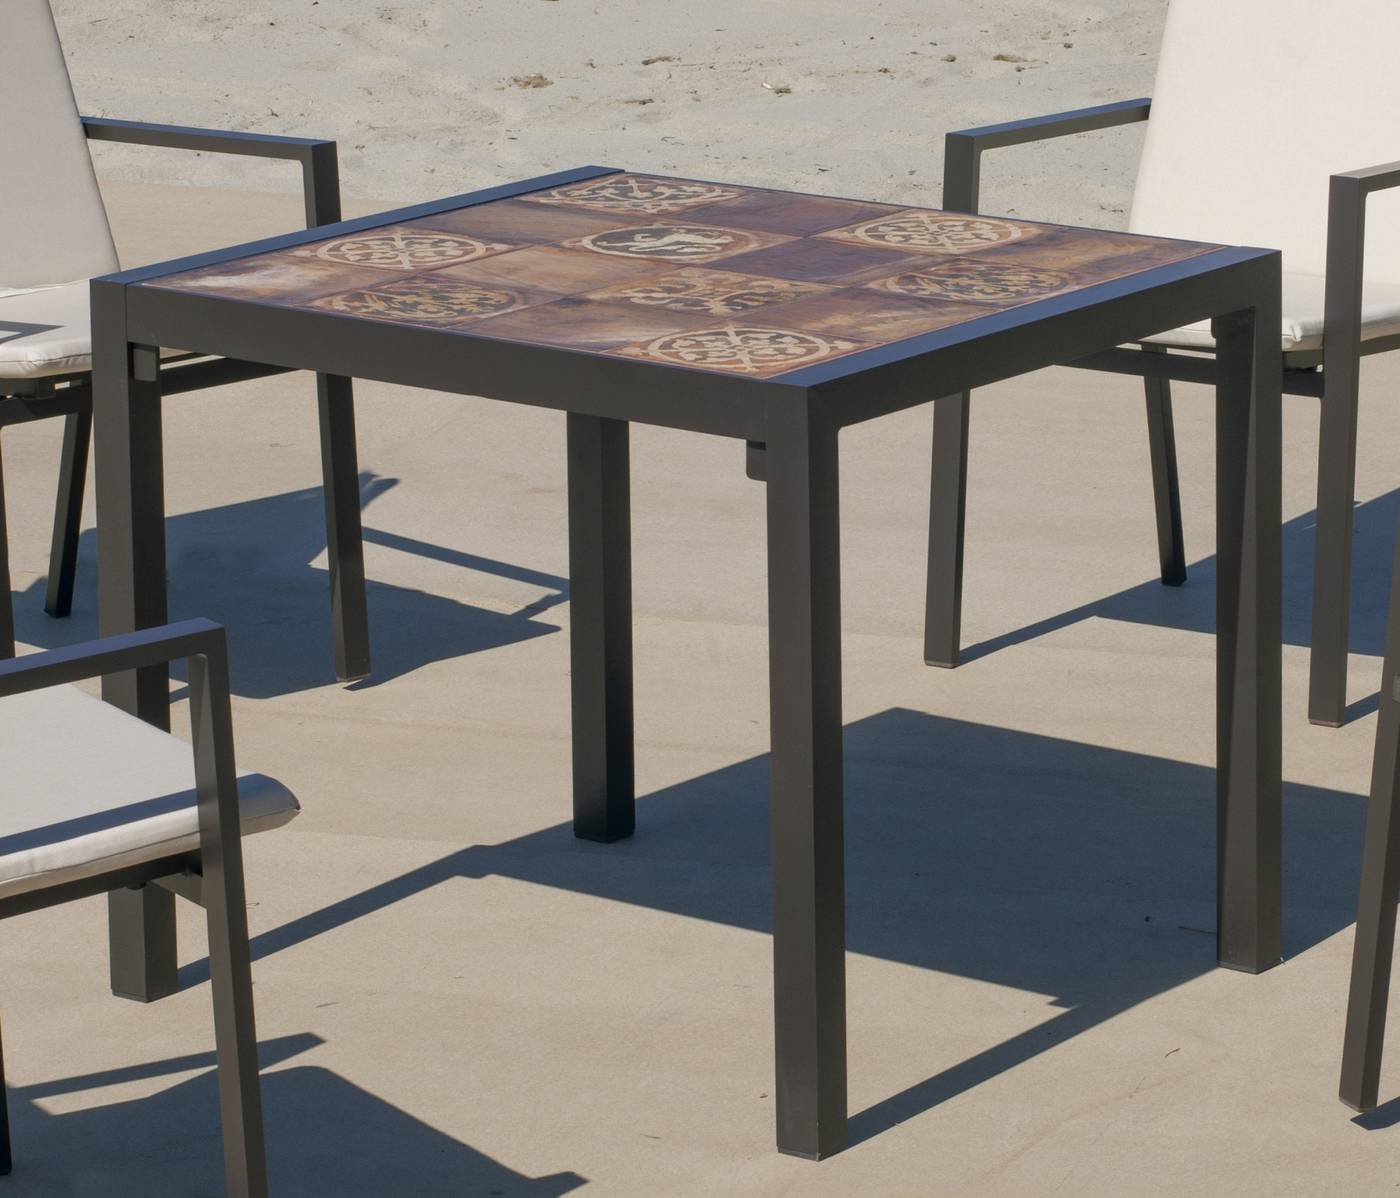 Set Lomba-80-4 Janeiro - Conjunto de aluminio color marrón: Mesa cuadrada con tablero mosaico de 80 cm + 4 sillones altos de textilen.